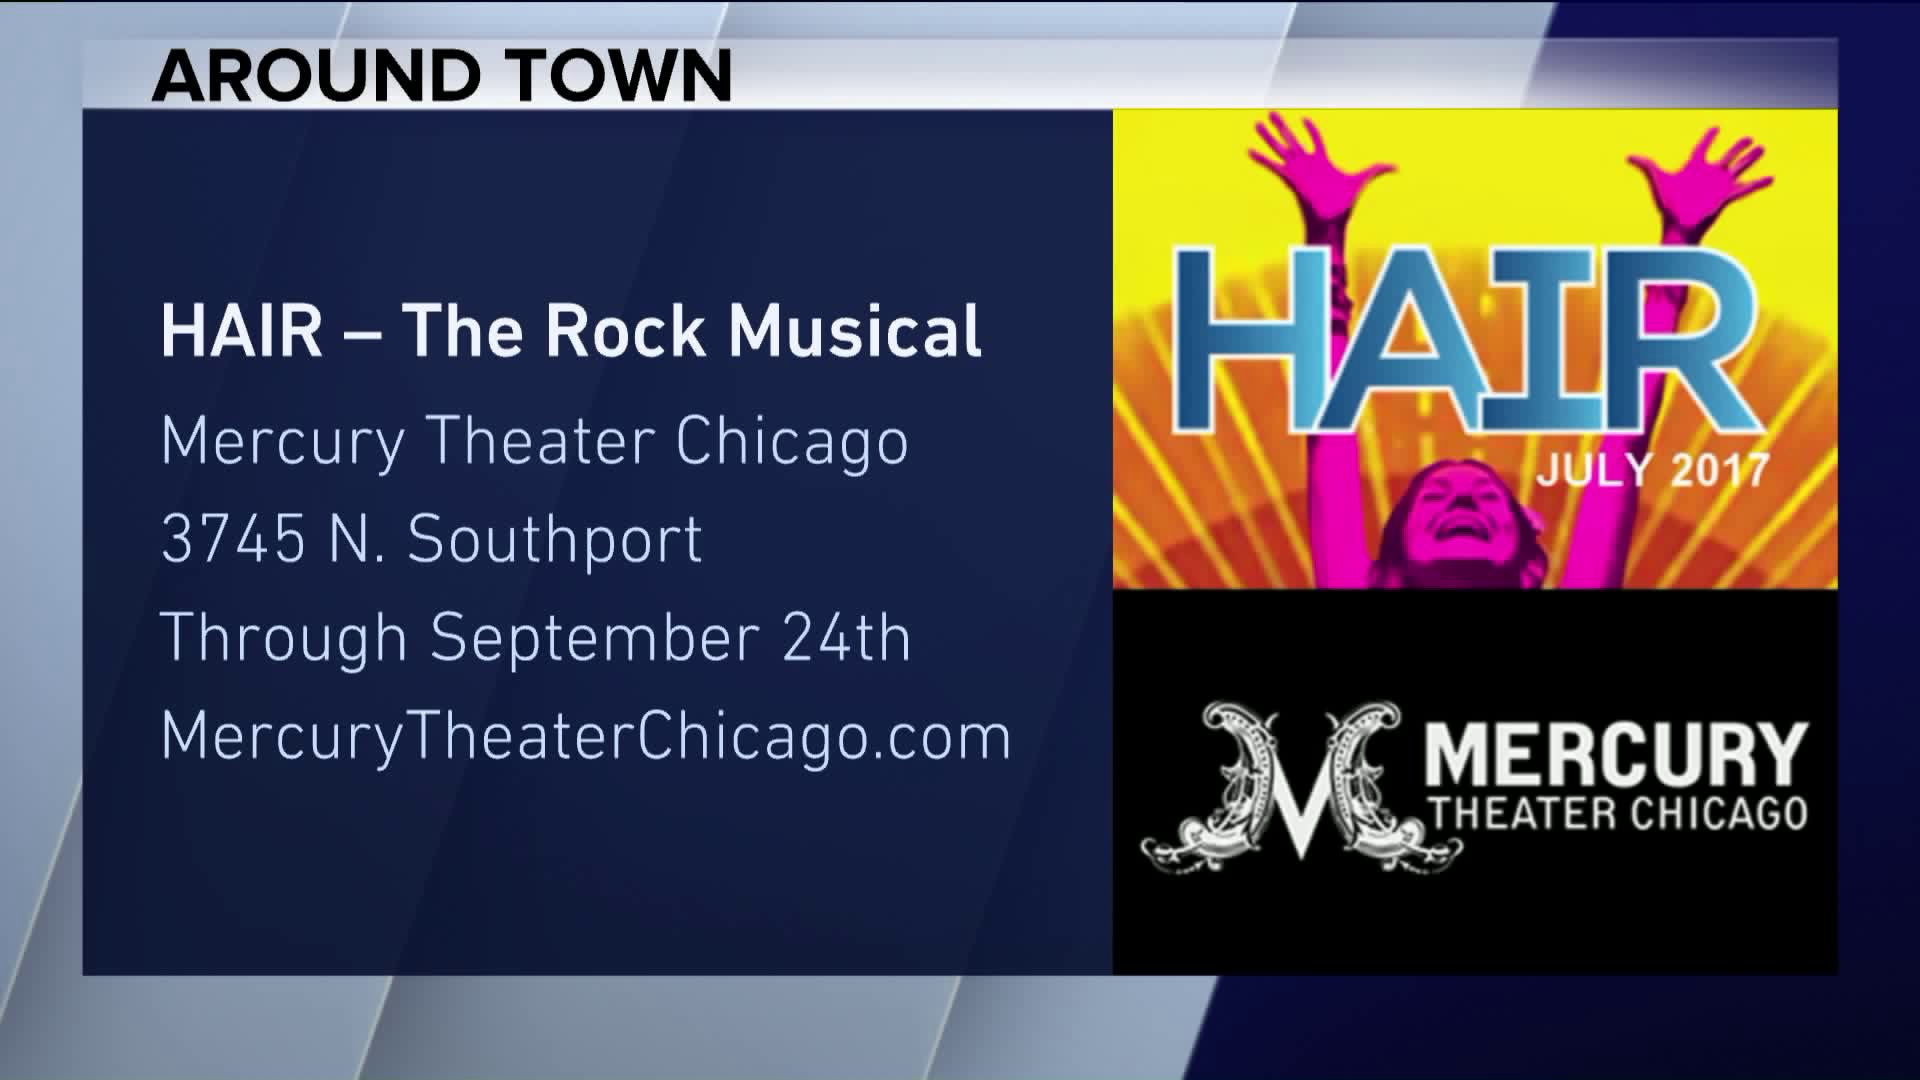 Around Town checks out ‘Hair’ – The Rock Musical